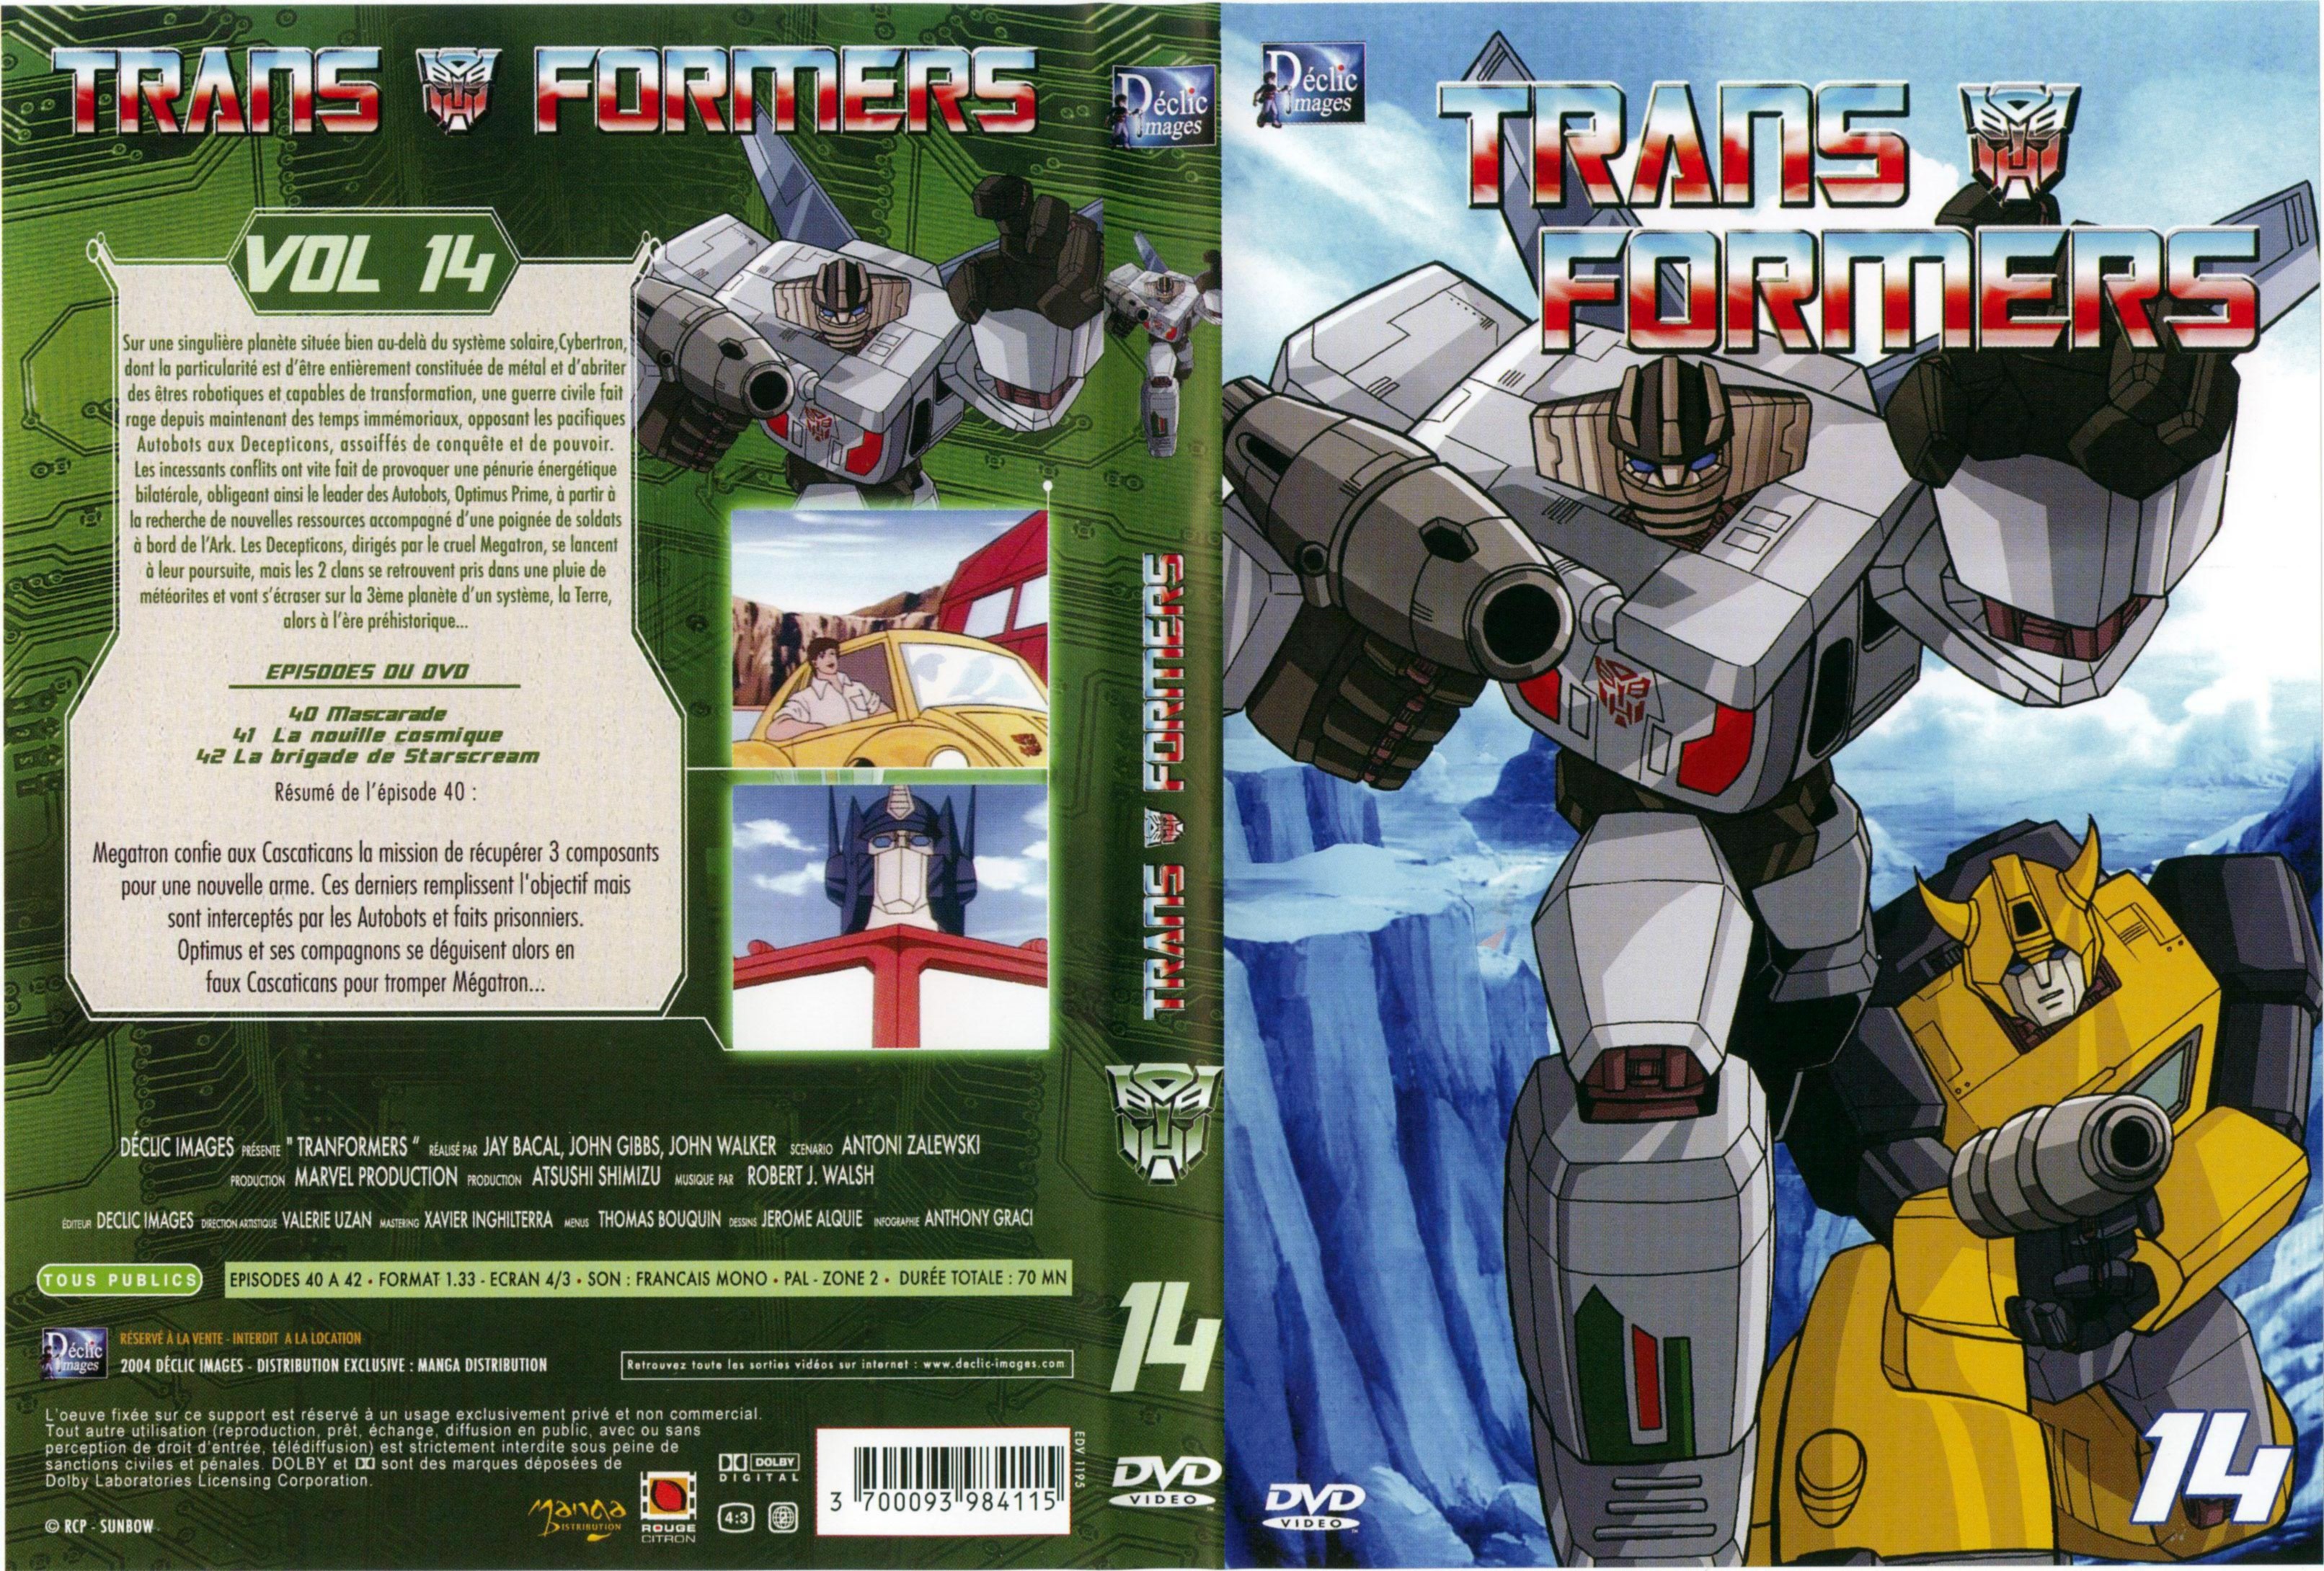 Jaquette DVD Transformers vol 14